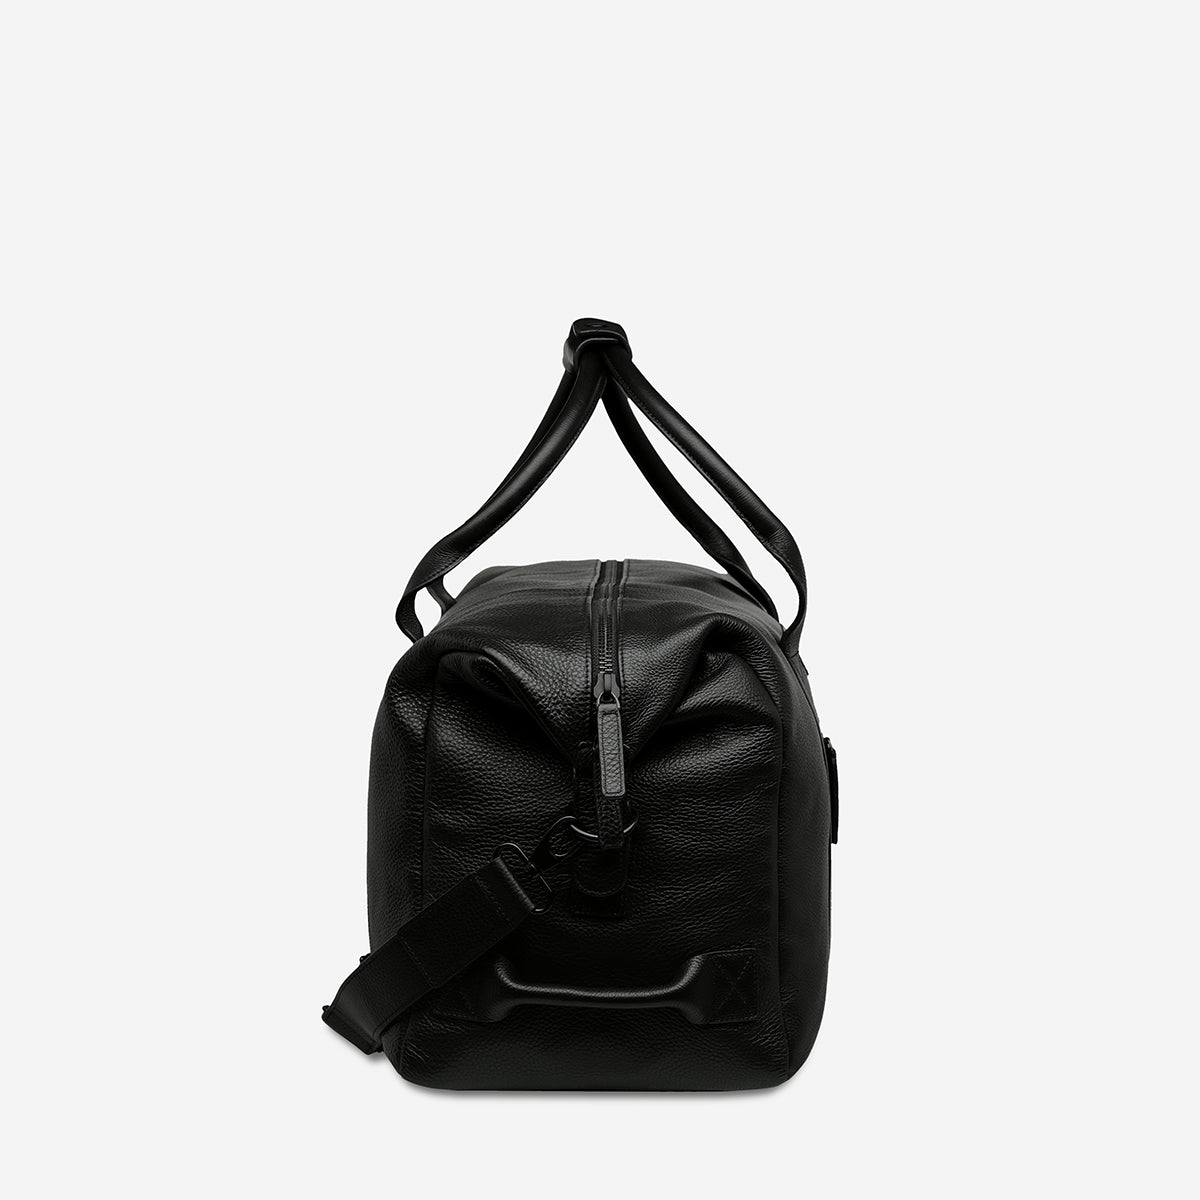 Everything I Wanted Bag - Black Leather